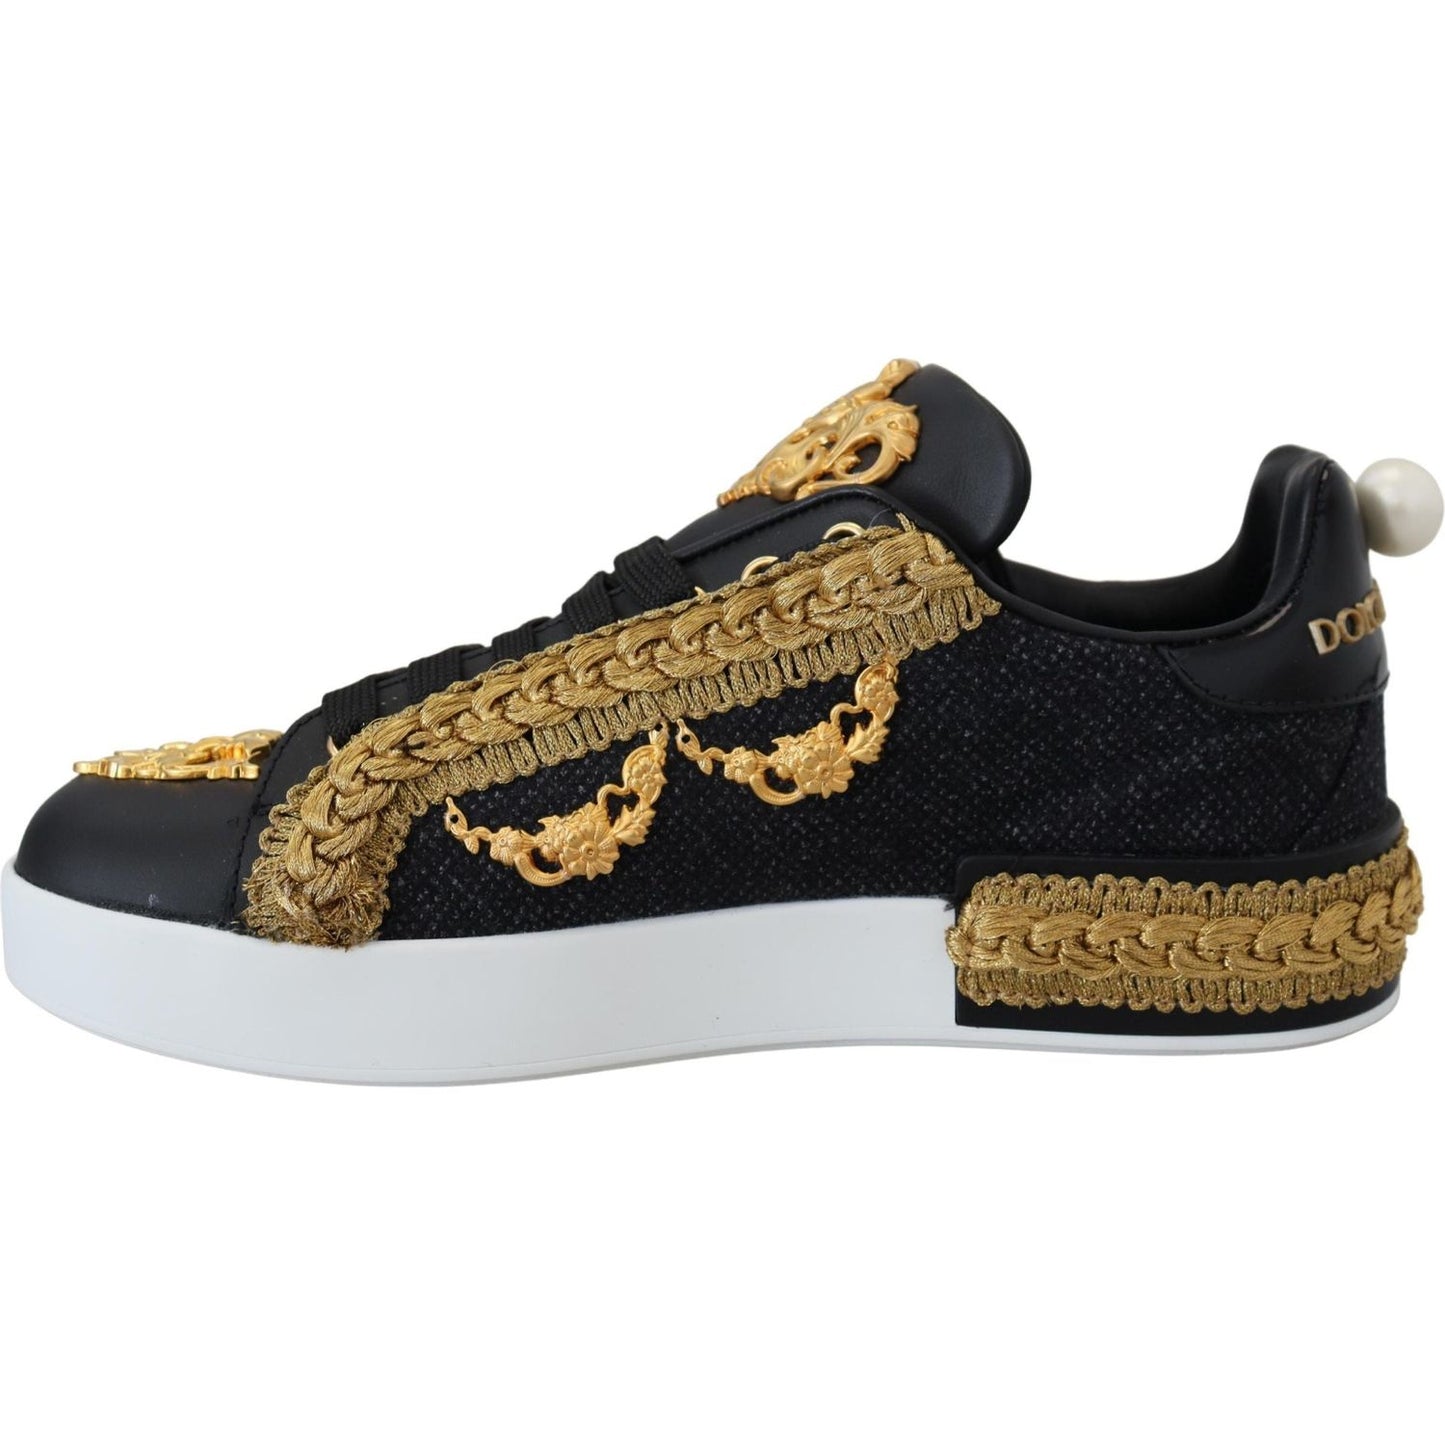 Dolce & Gabbana Elegant Portofino Leather Sneakers in Black black-gold-baroque-portofino-leather-sneakers-shoes